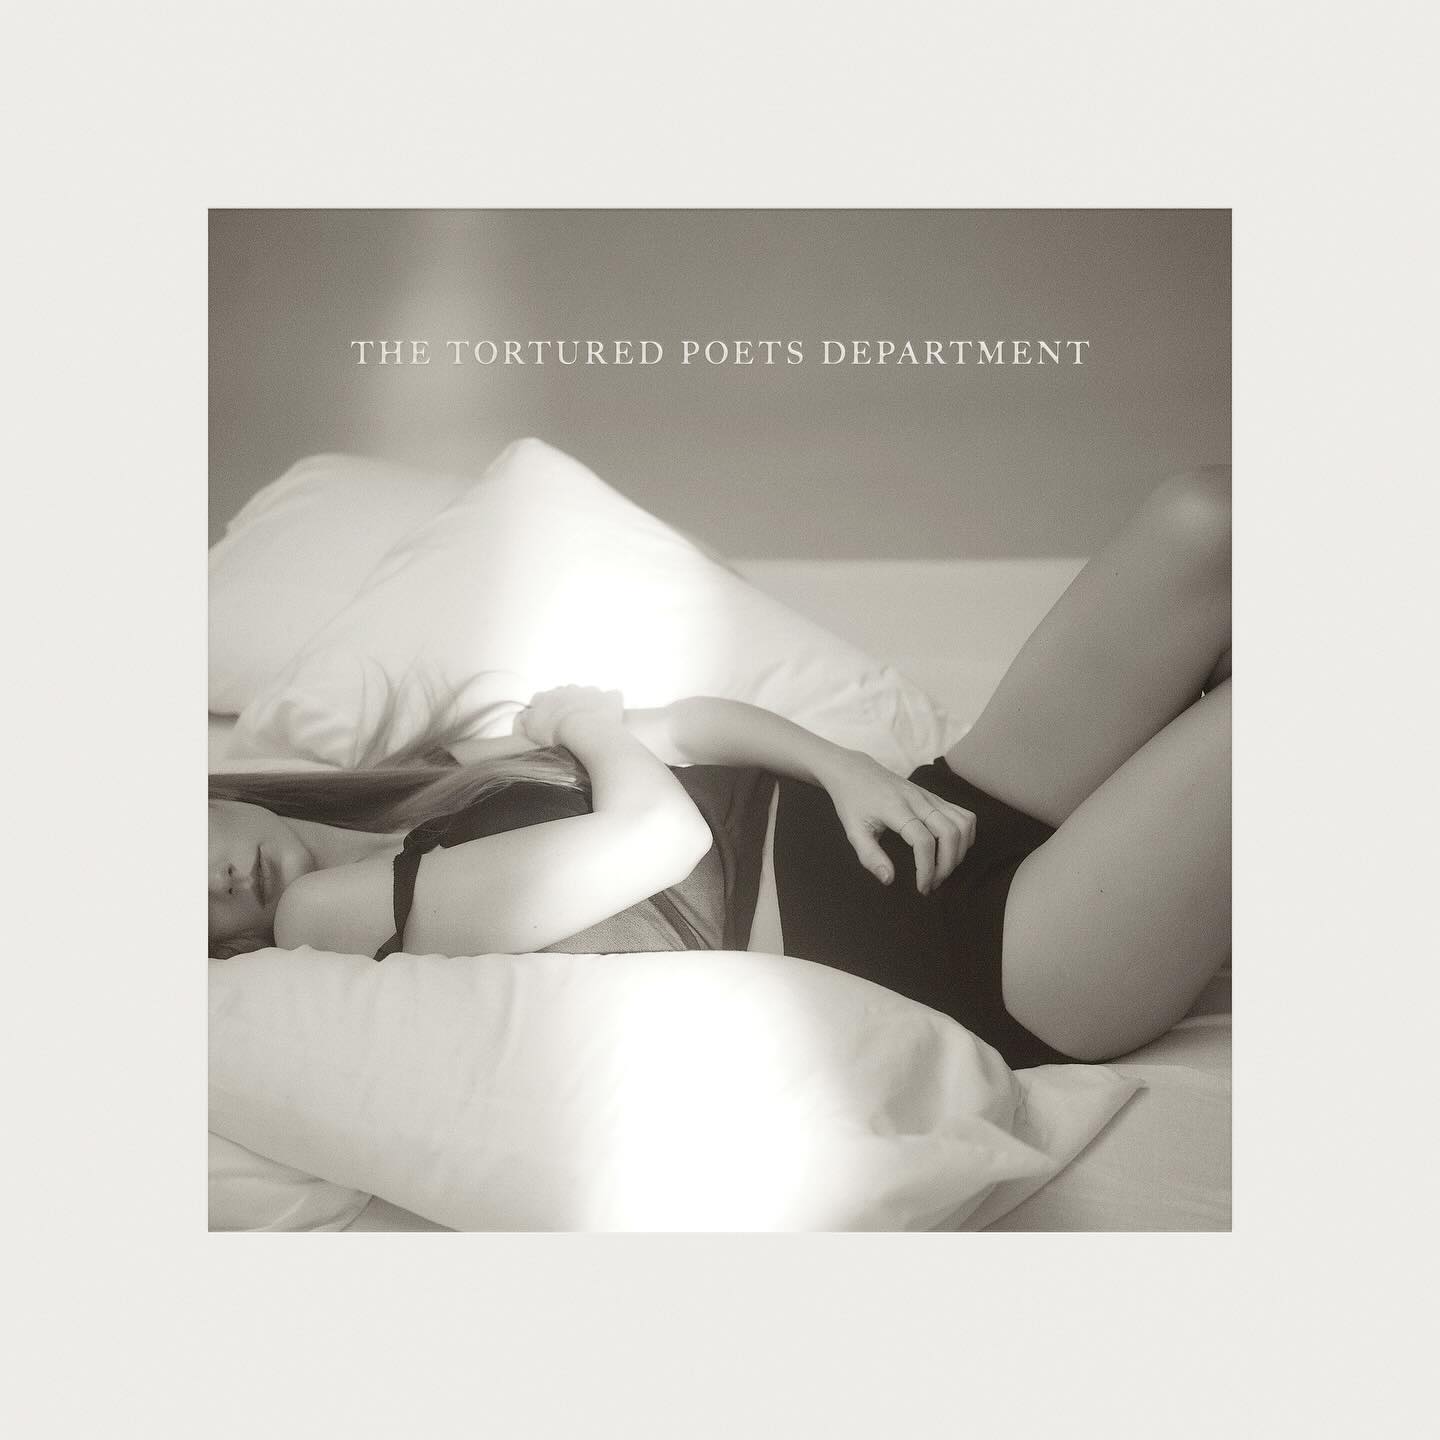 Das Cover von Taylors neuem Album „The Tortured Poets Department“.